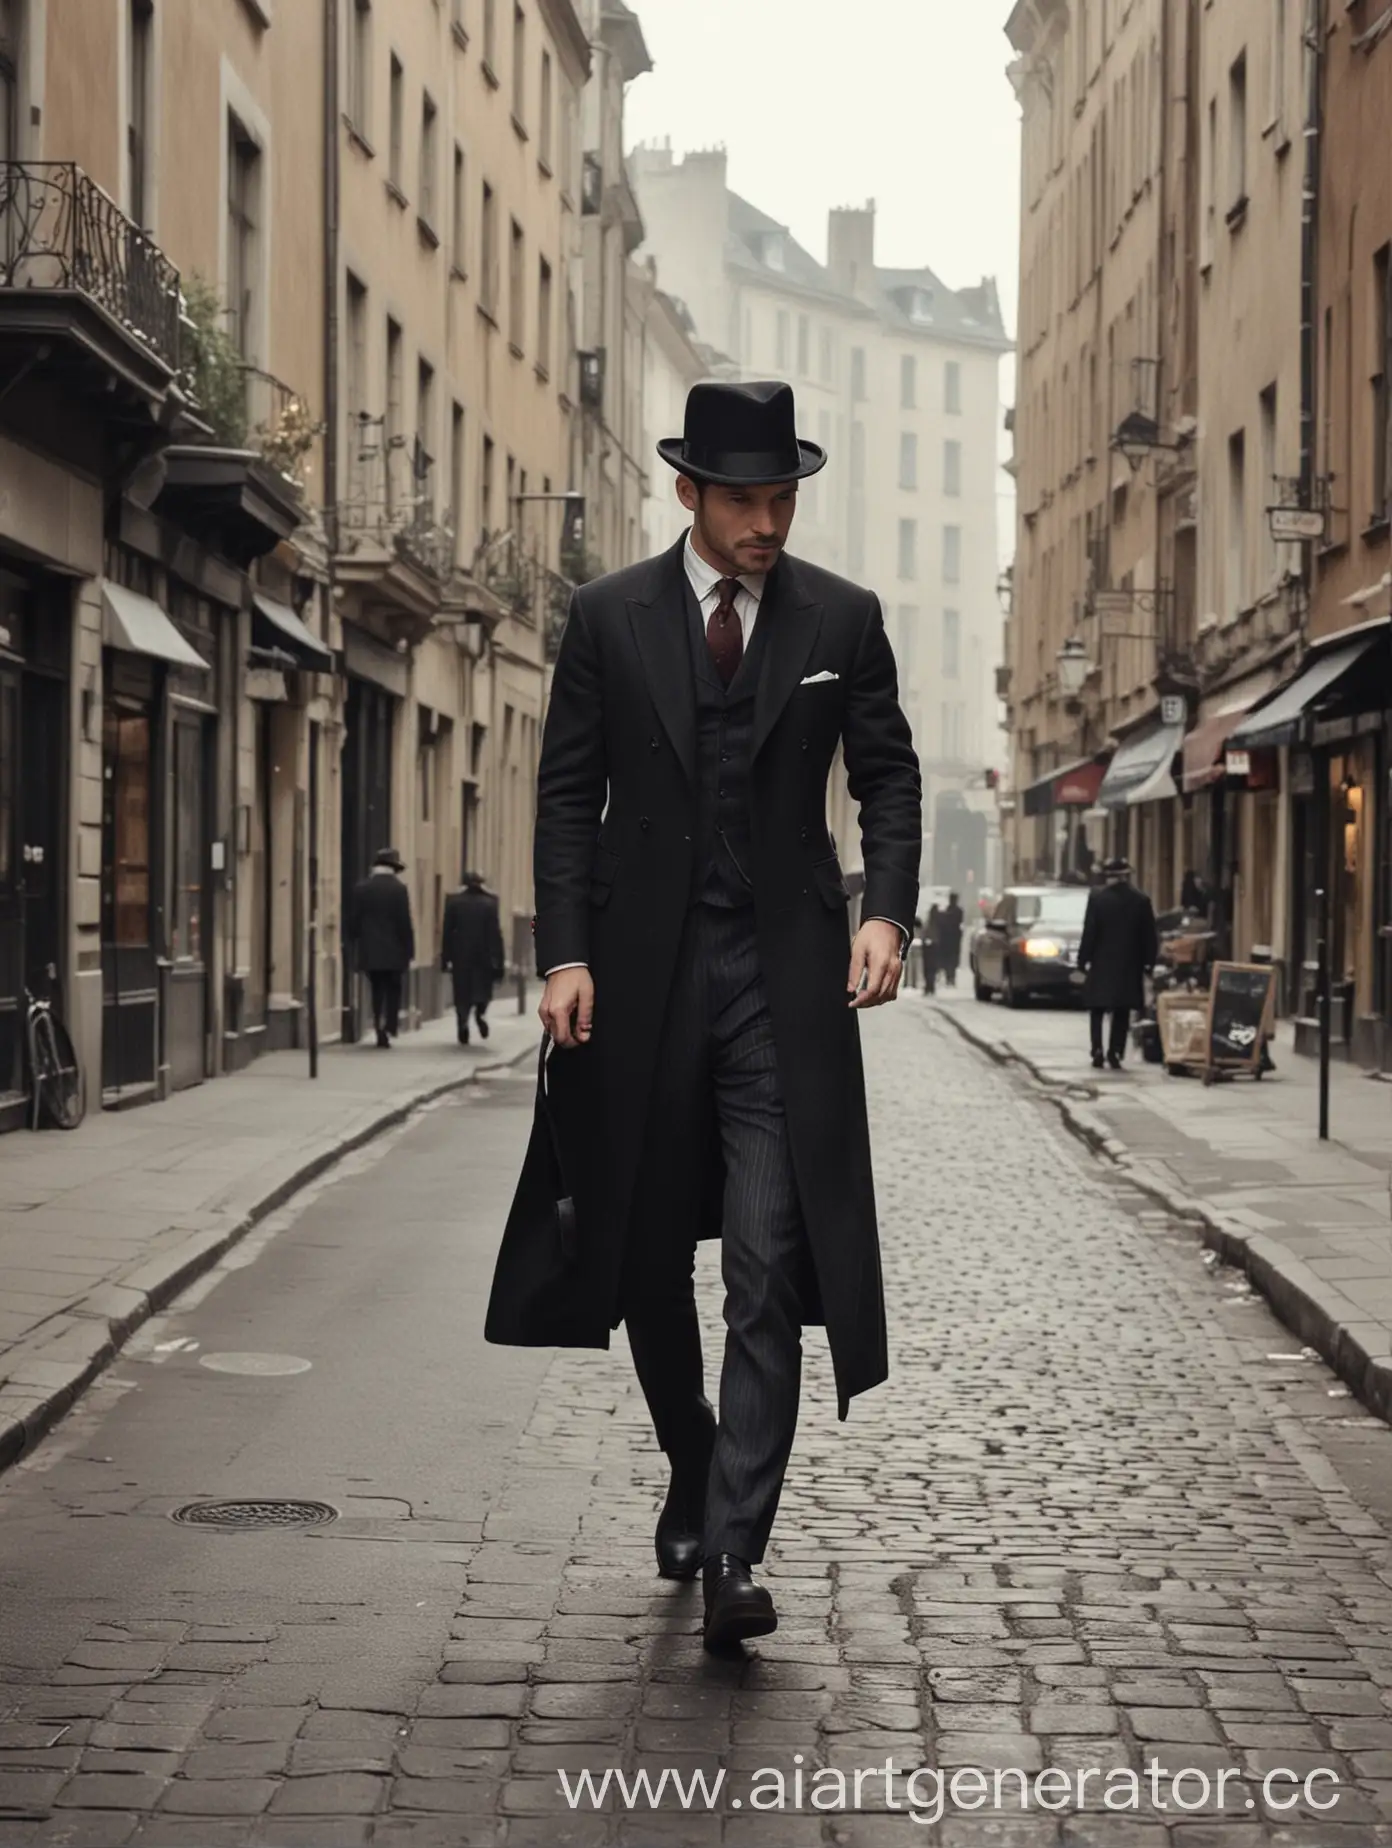 Джентльмен гуляет по улице